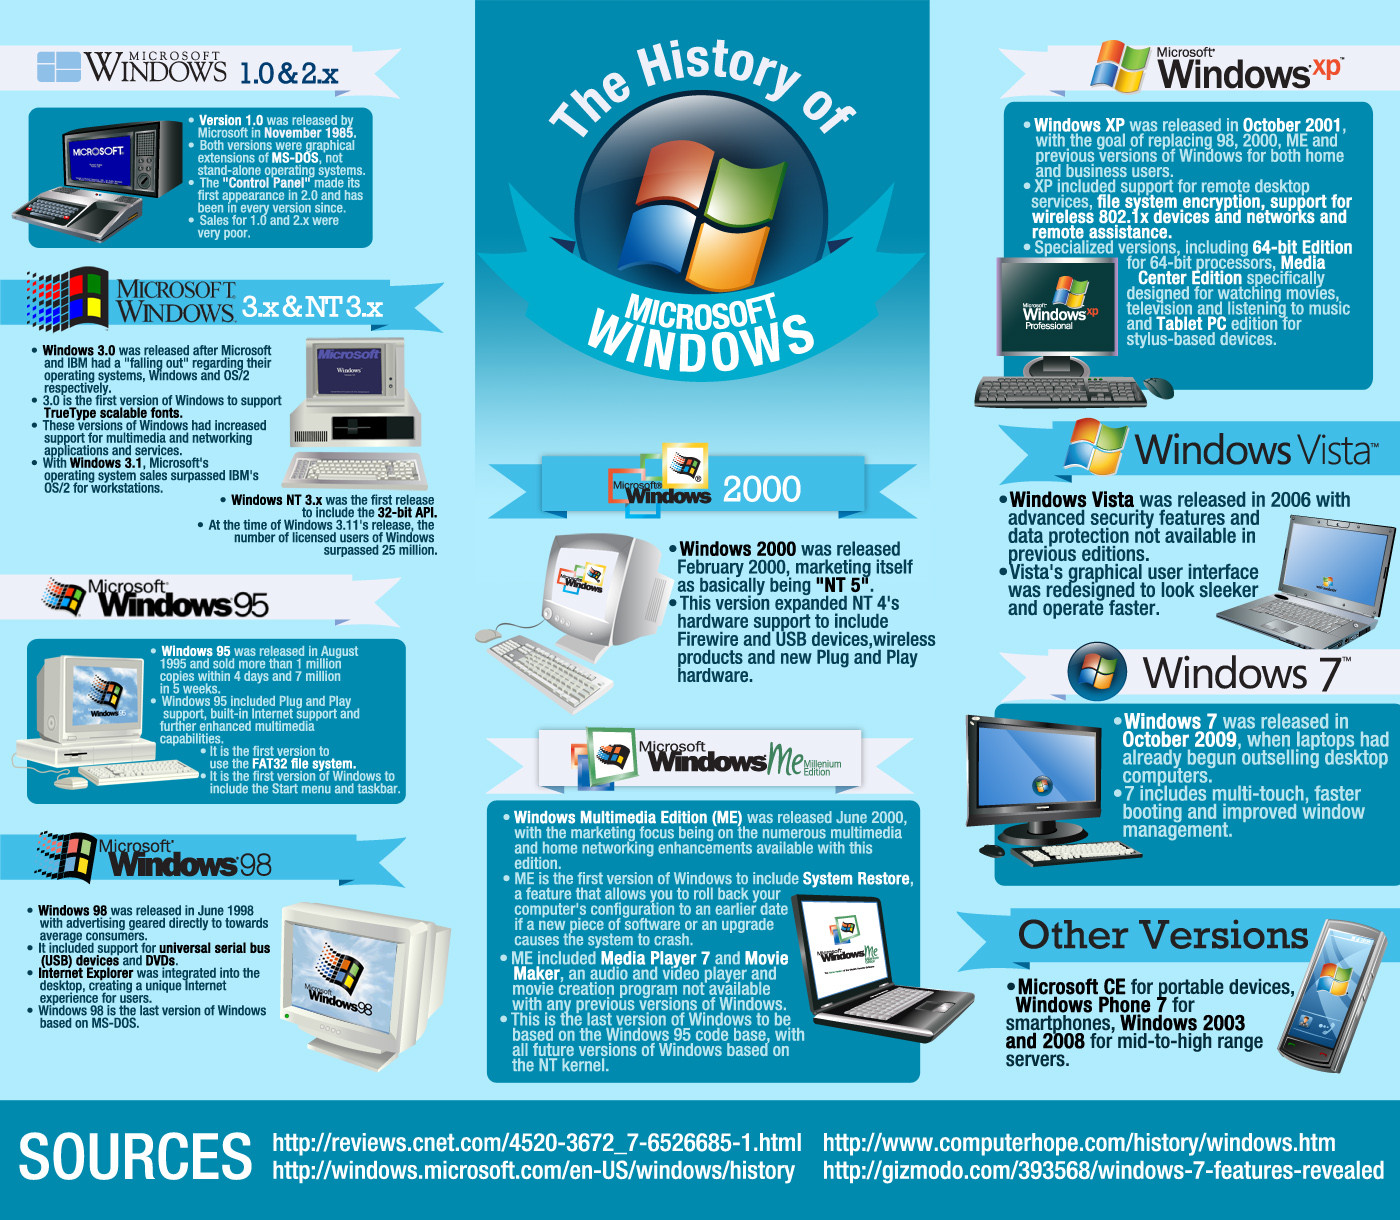 historia de windows